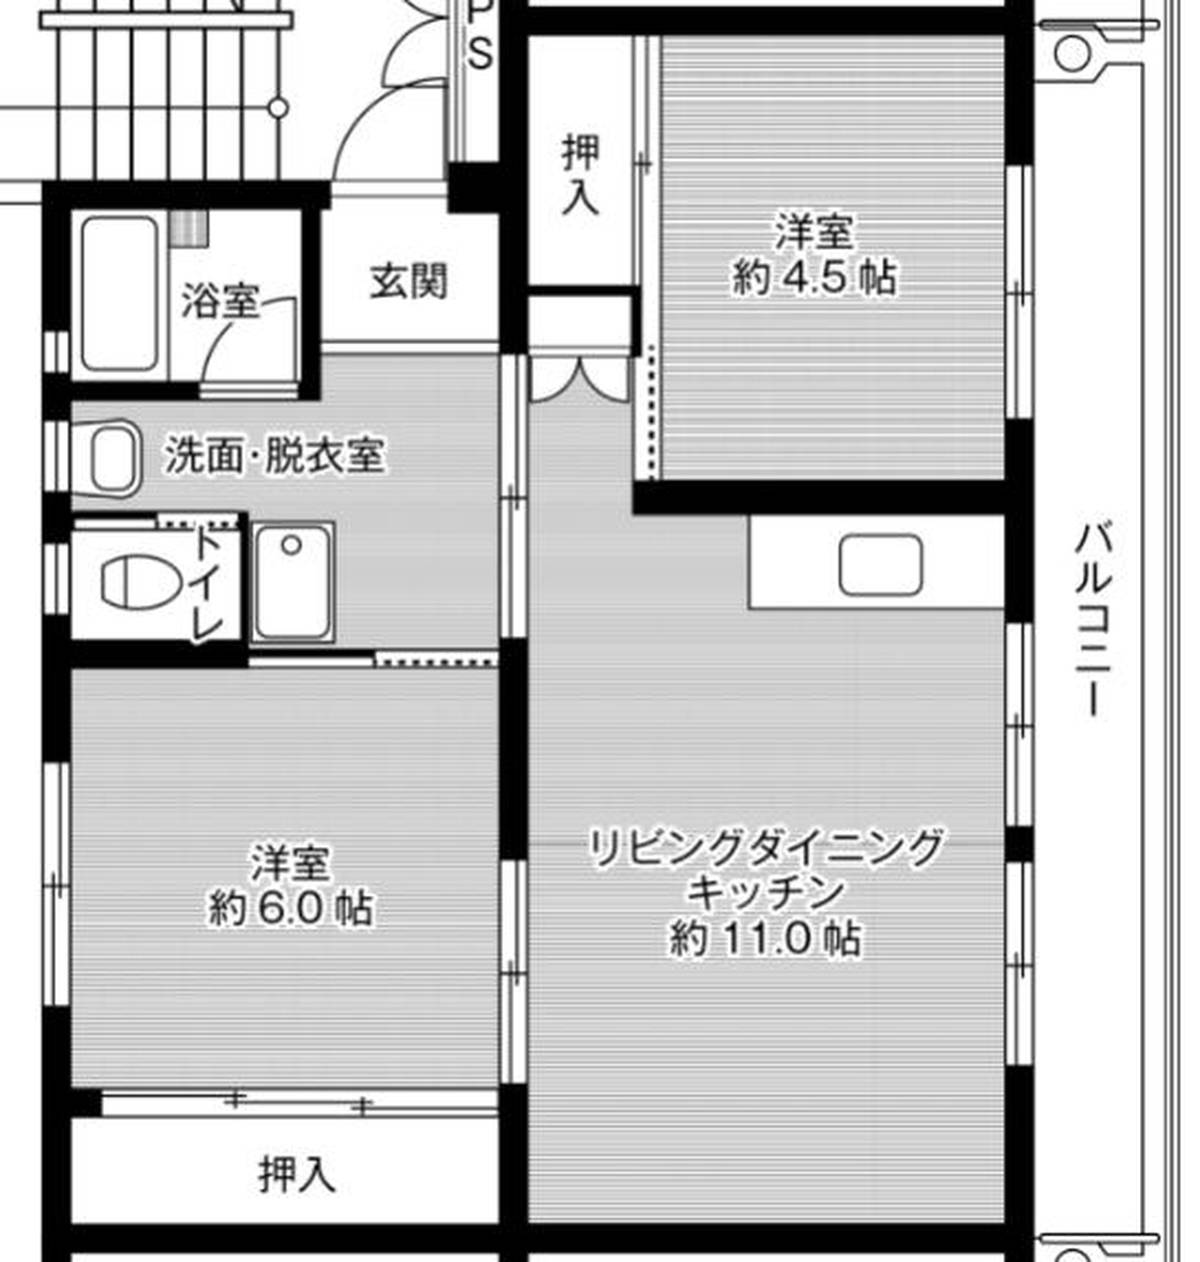 2LDK floorplan of Village House Imajuku in Nishi-ku